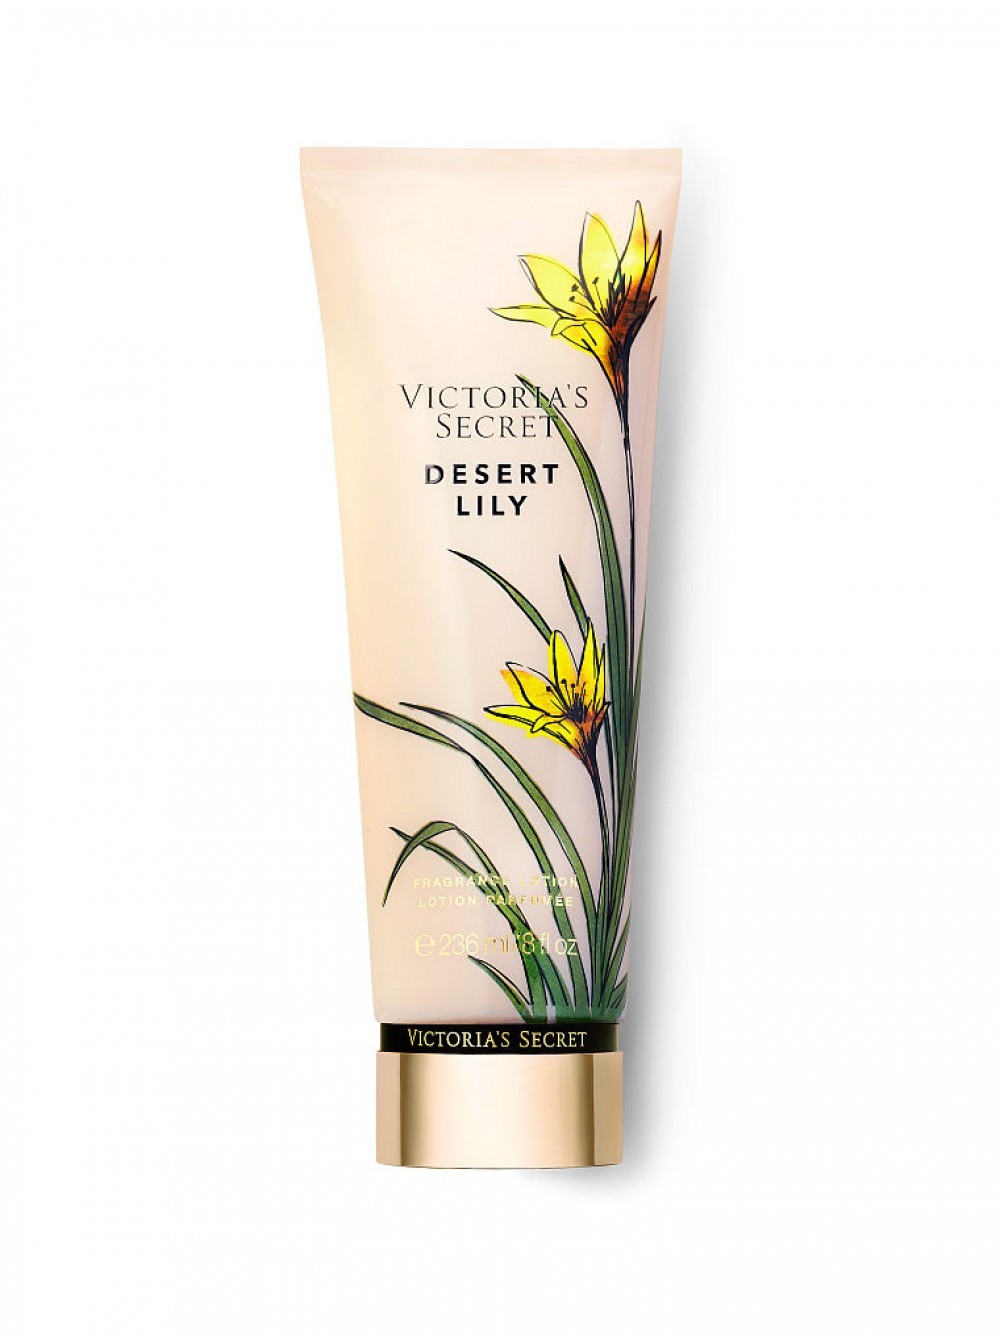 Подарочный набор Victoria's Secret Desert Lily (Fragrance Mists/Fragrance Lotion)